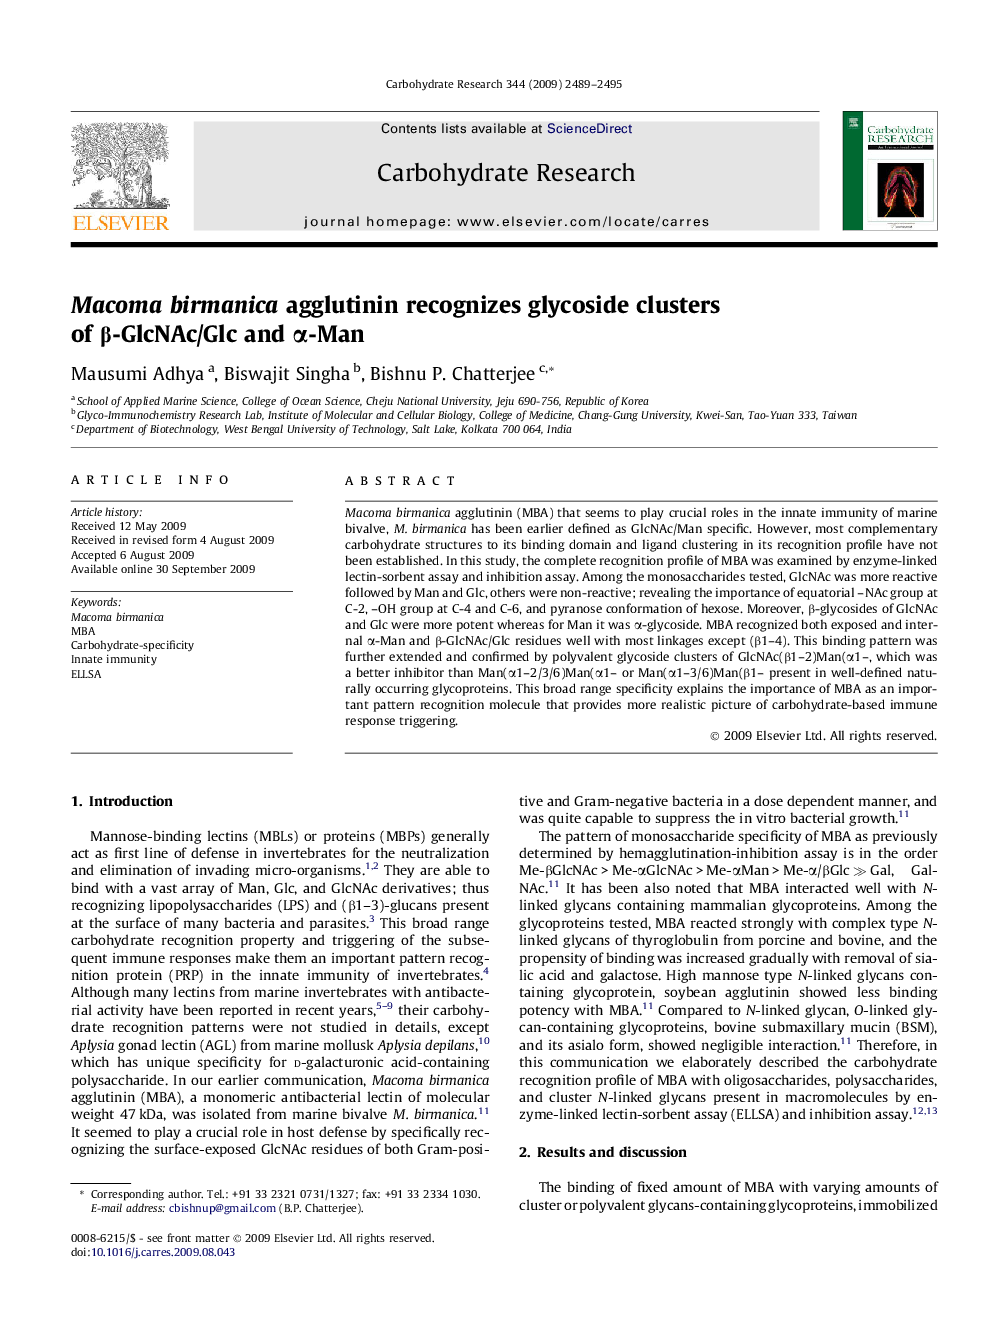 Macoma birmanica agglutinin recognizes glycoside clusters of Î²-GlcNAc/Glc and Î±-Man